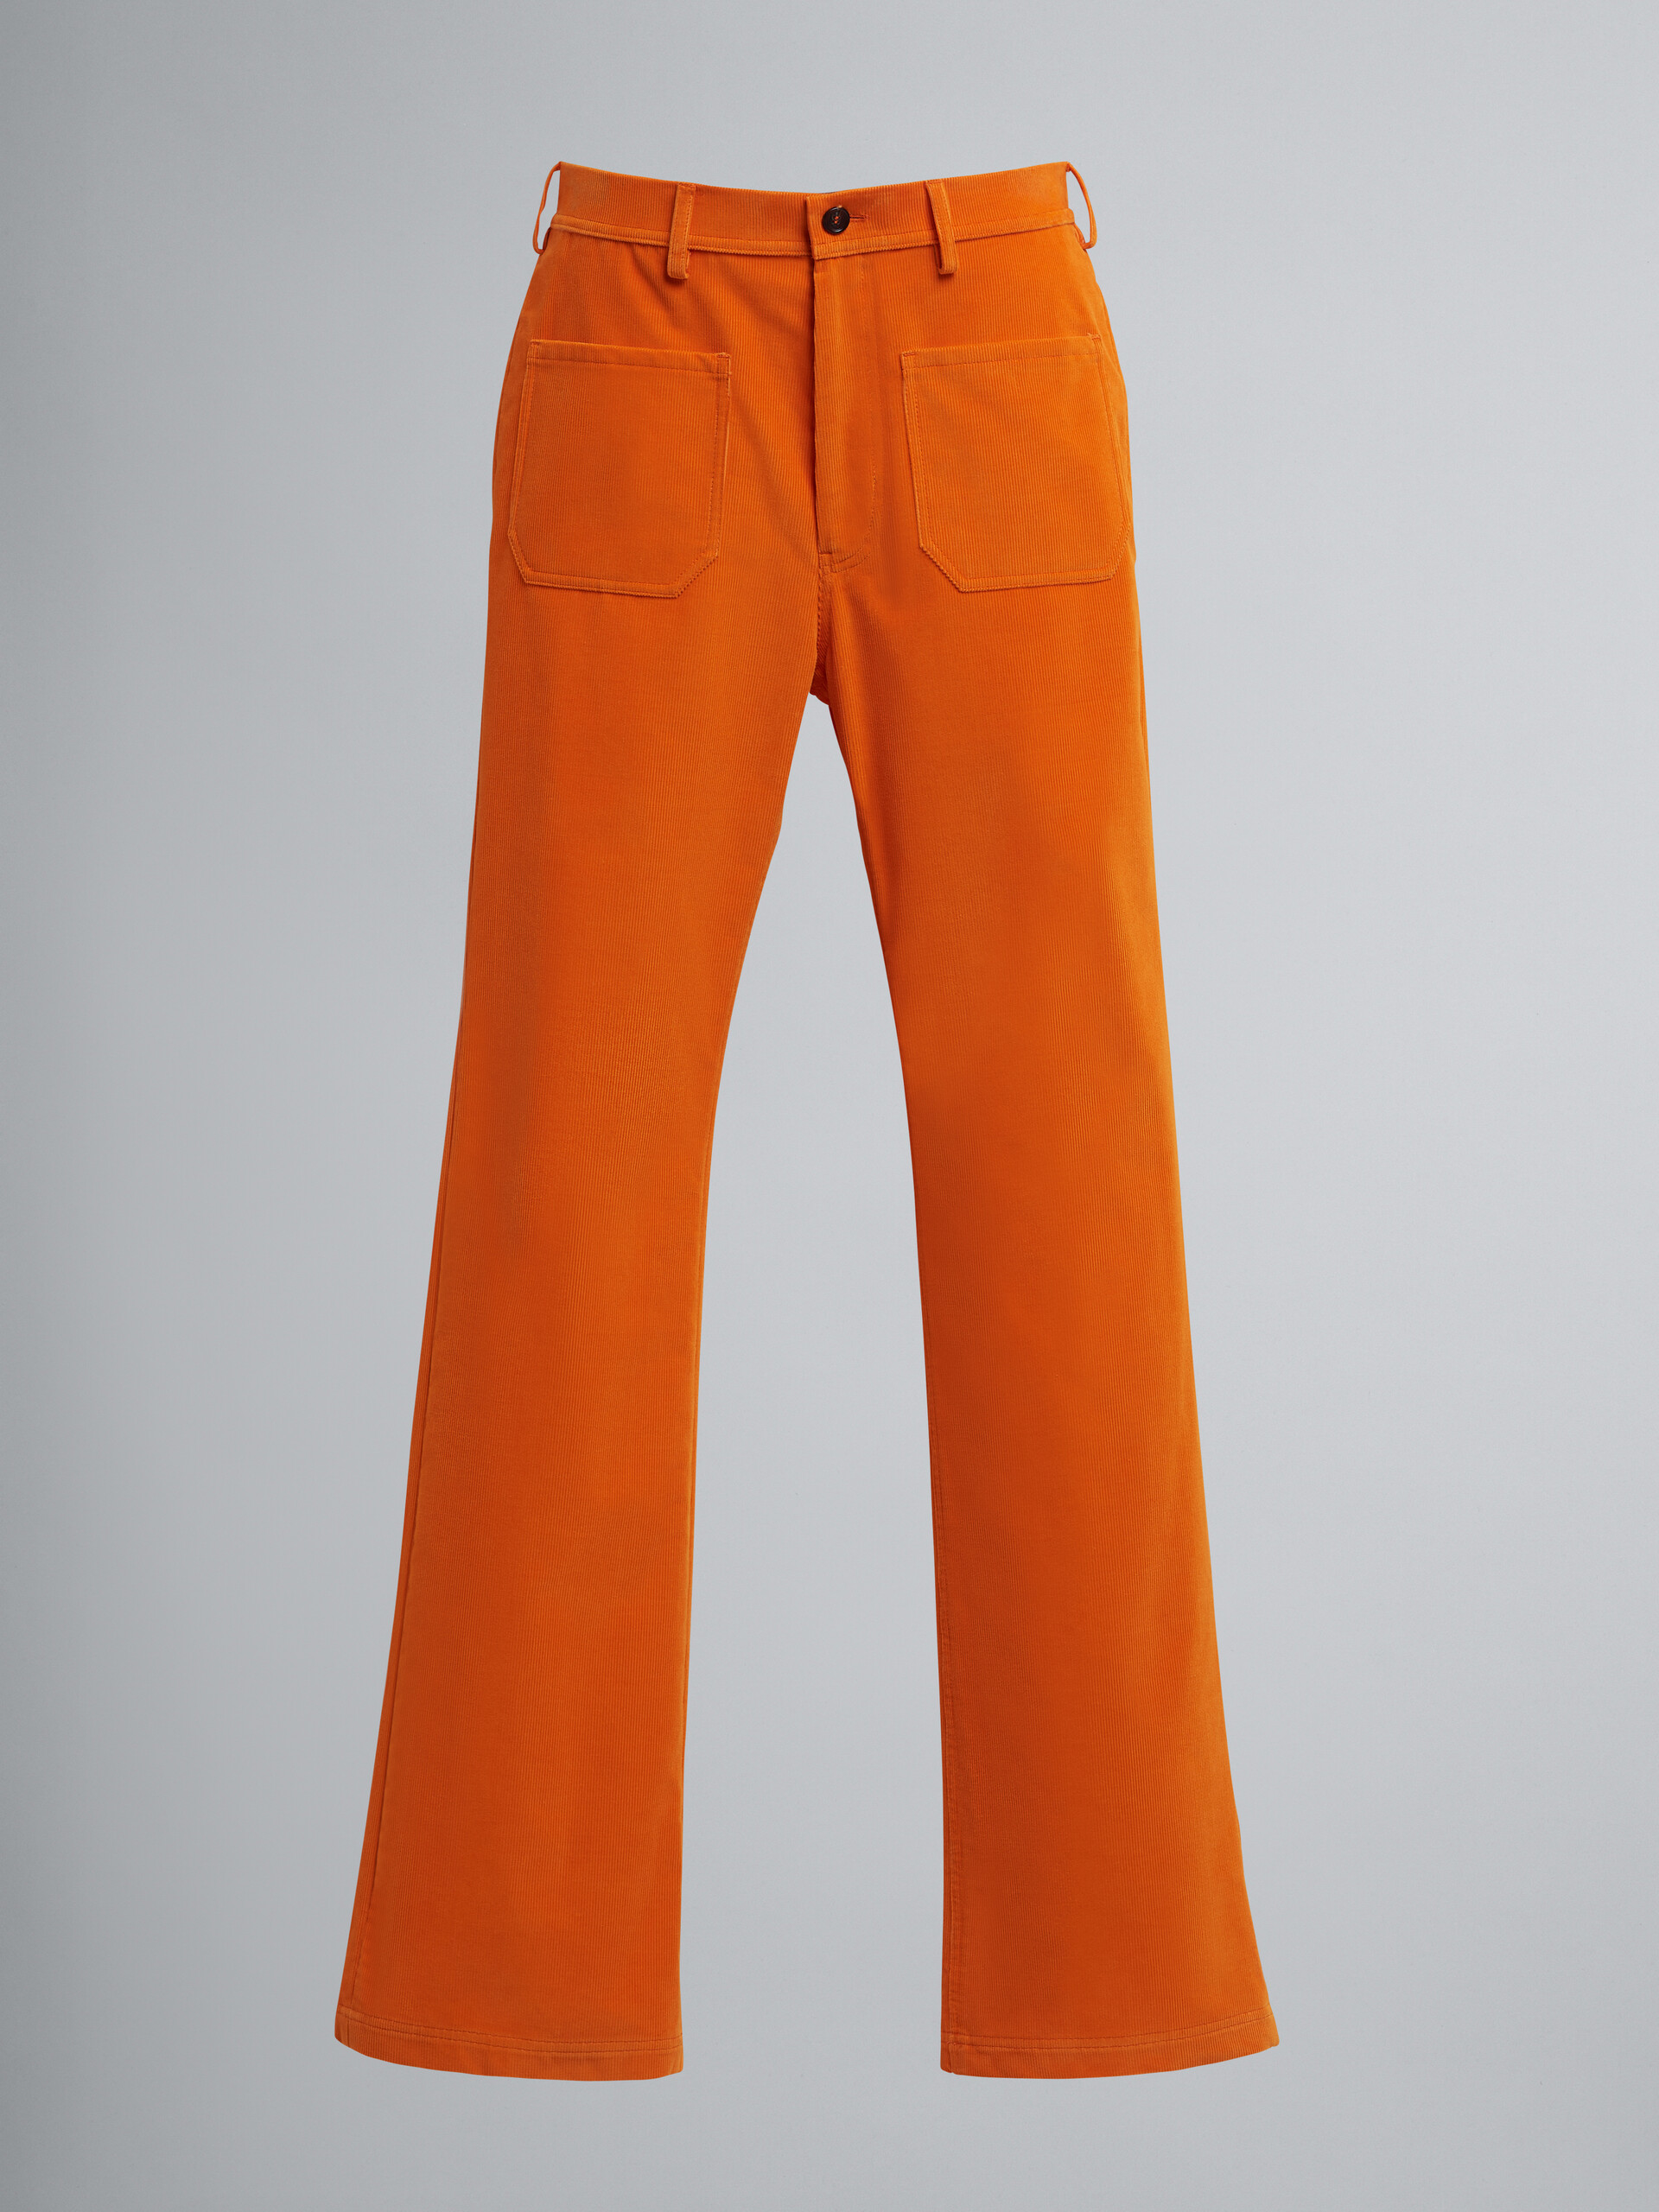 Cotton flared pants - Pants - Image 1